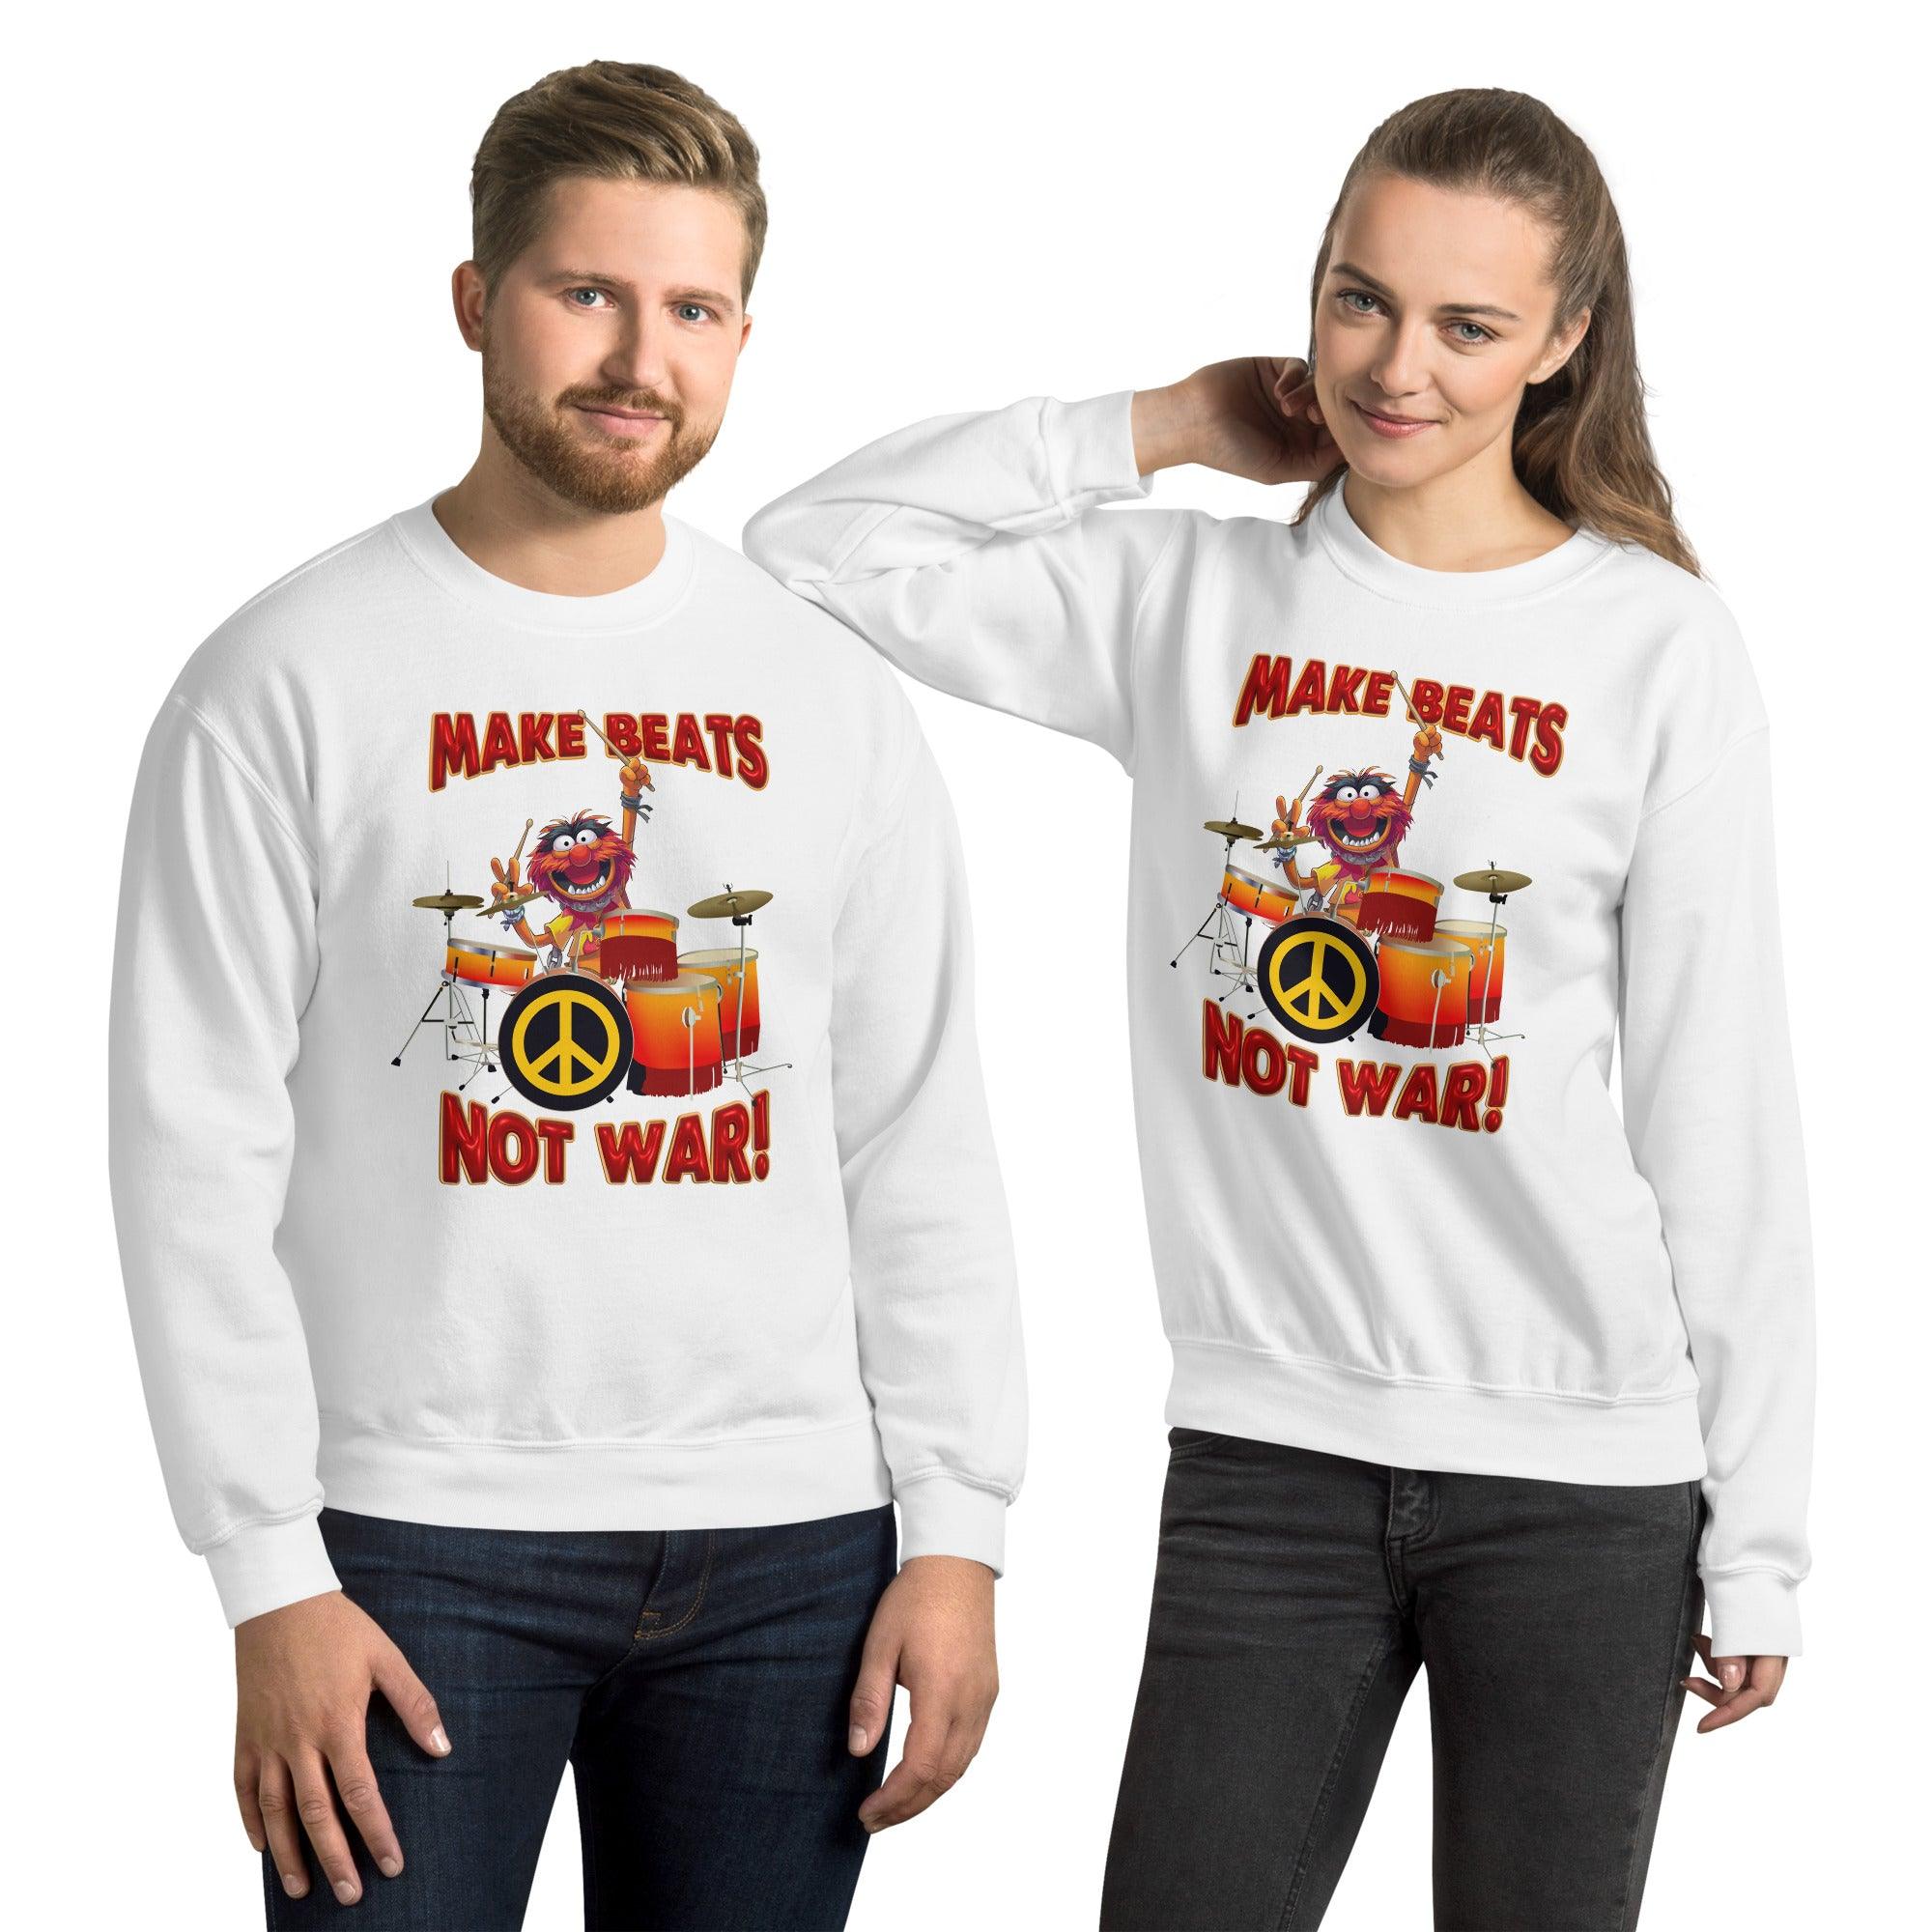 Muppet® Animal Inspired Design | Animal Drums "Make Beats Not War" Unisex Sweatshirt (S-5XL) - Tedeschi Studio, LLC.